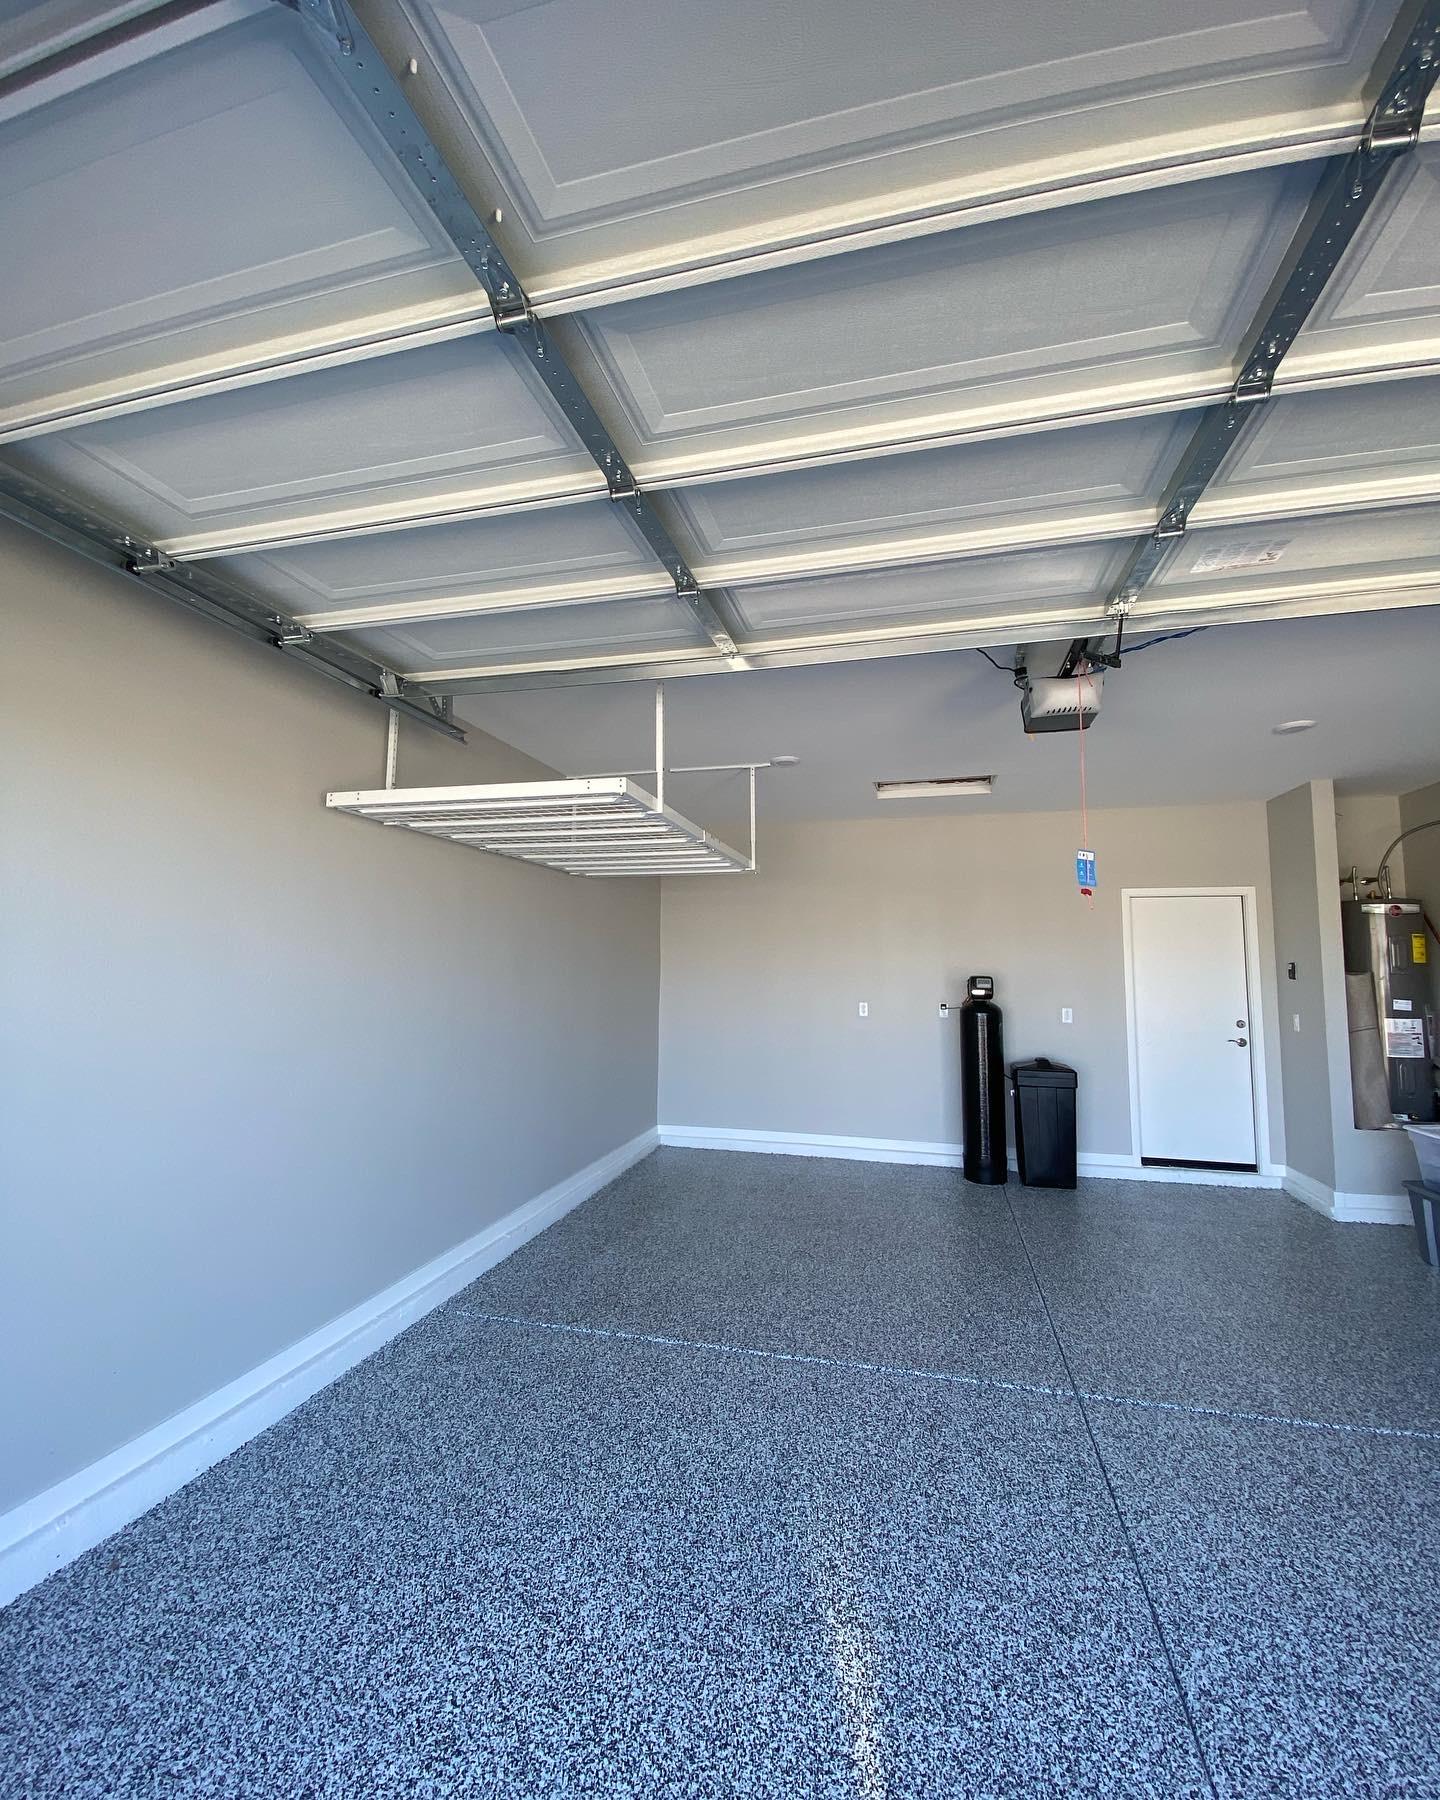 RX Garage Floor Coatings and Storage Solutions